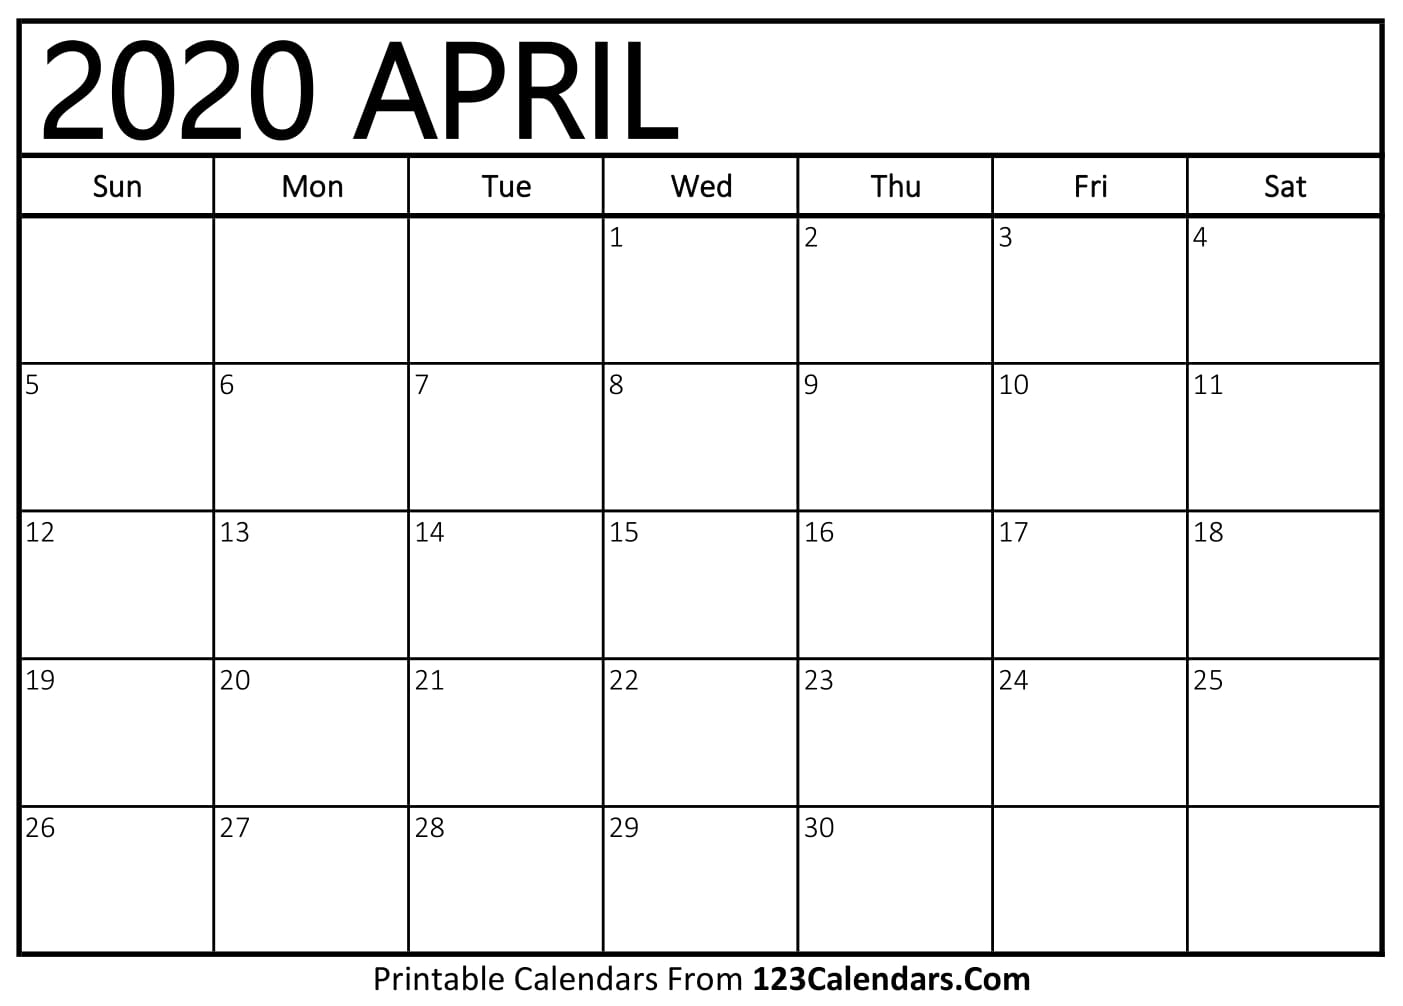 April 2020 Printable Calendar | 123Calendars